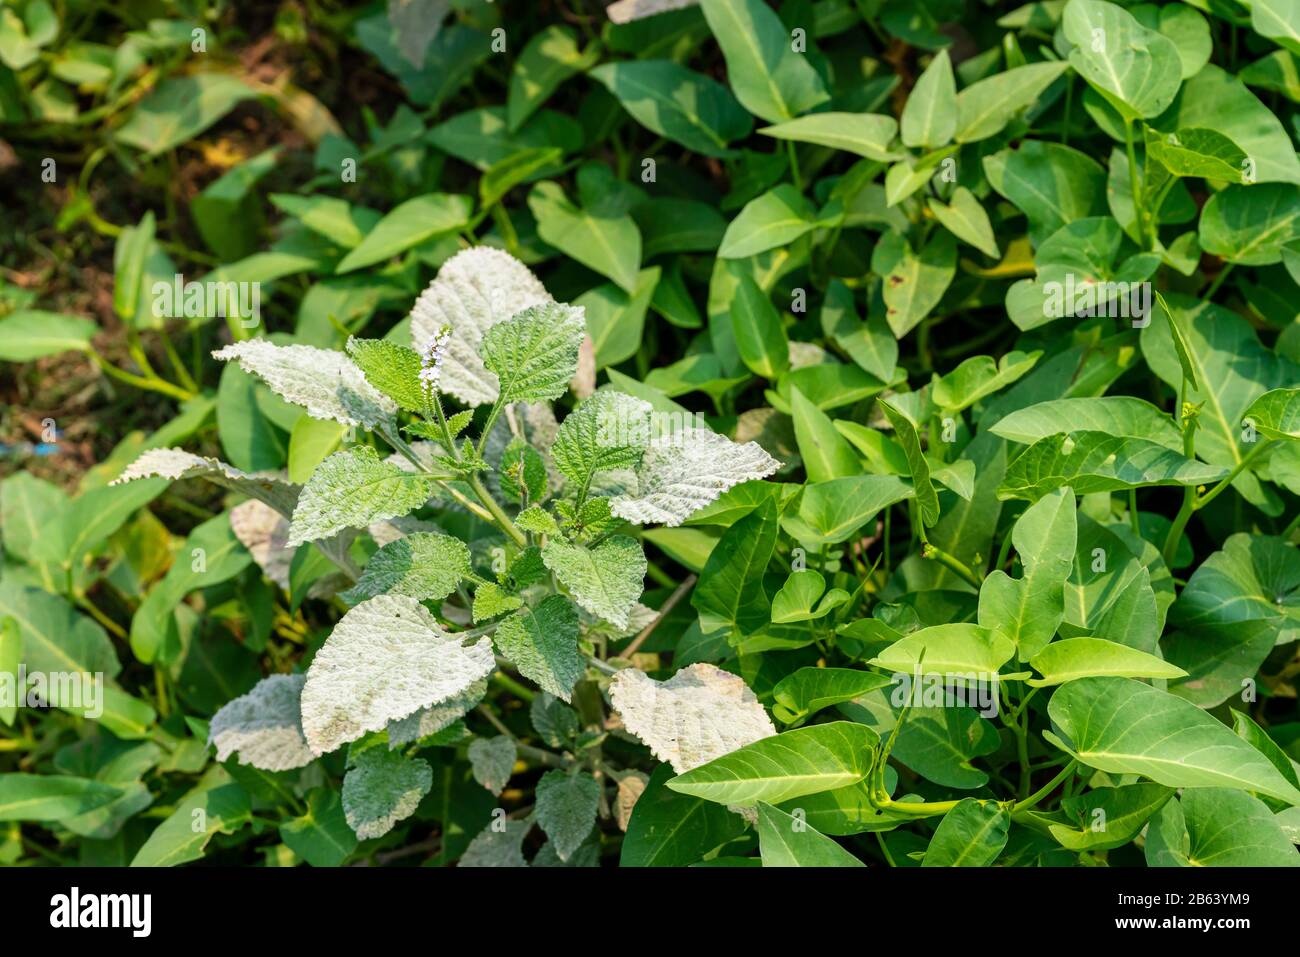 Powdery mildew, a garden fungus disease, on green leaves Stock Photo